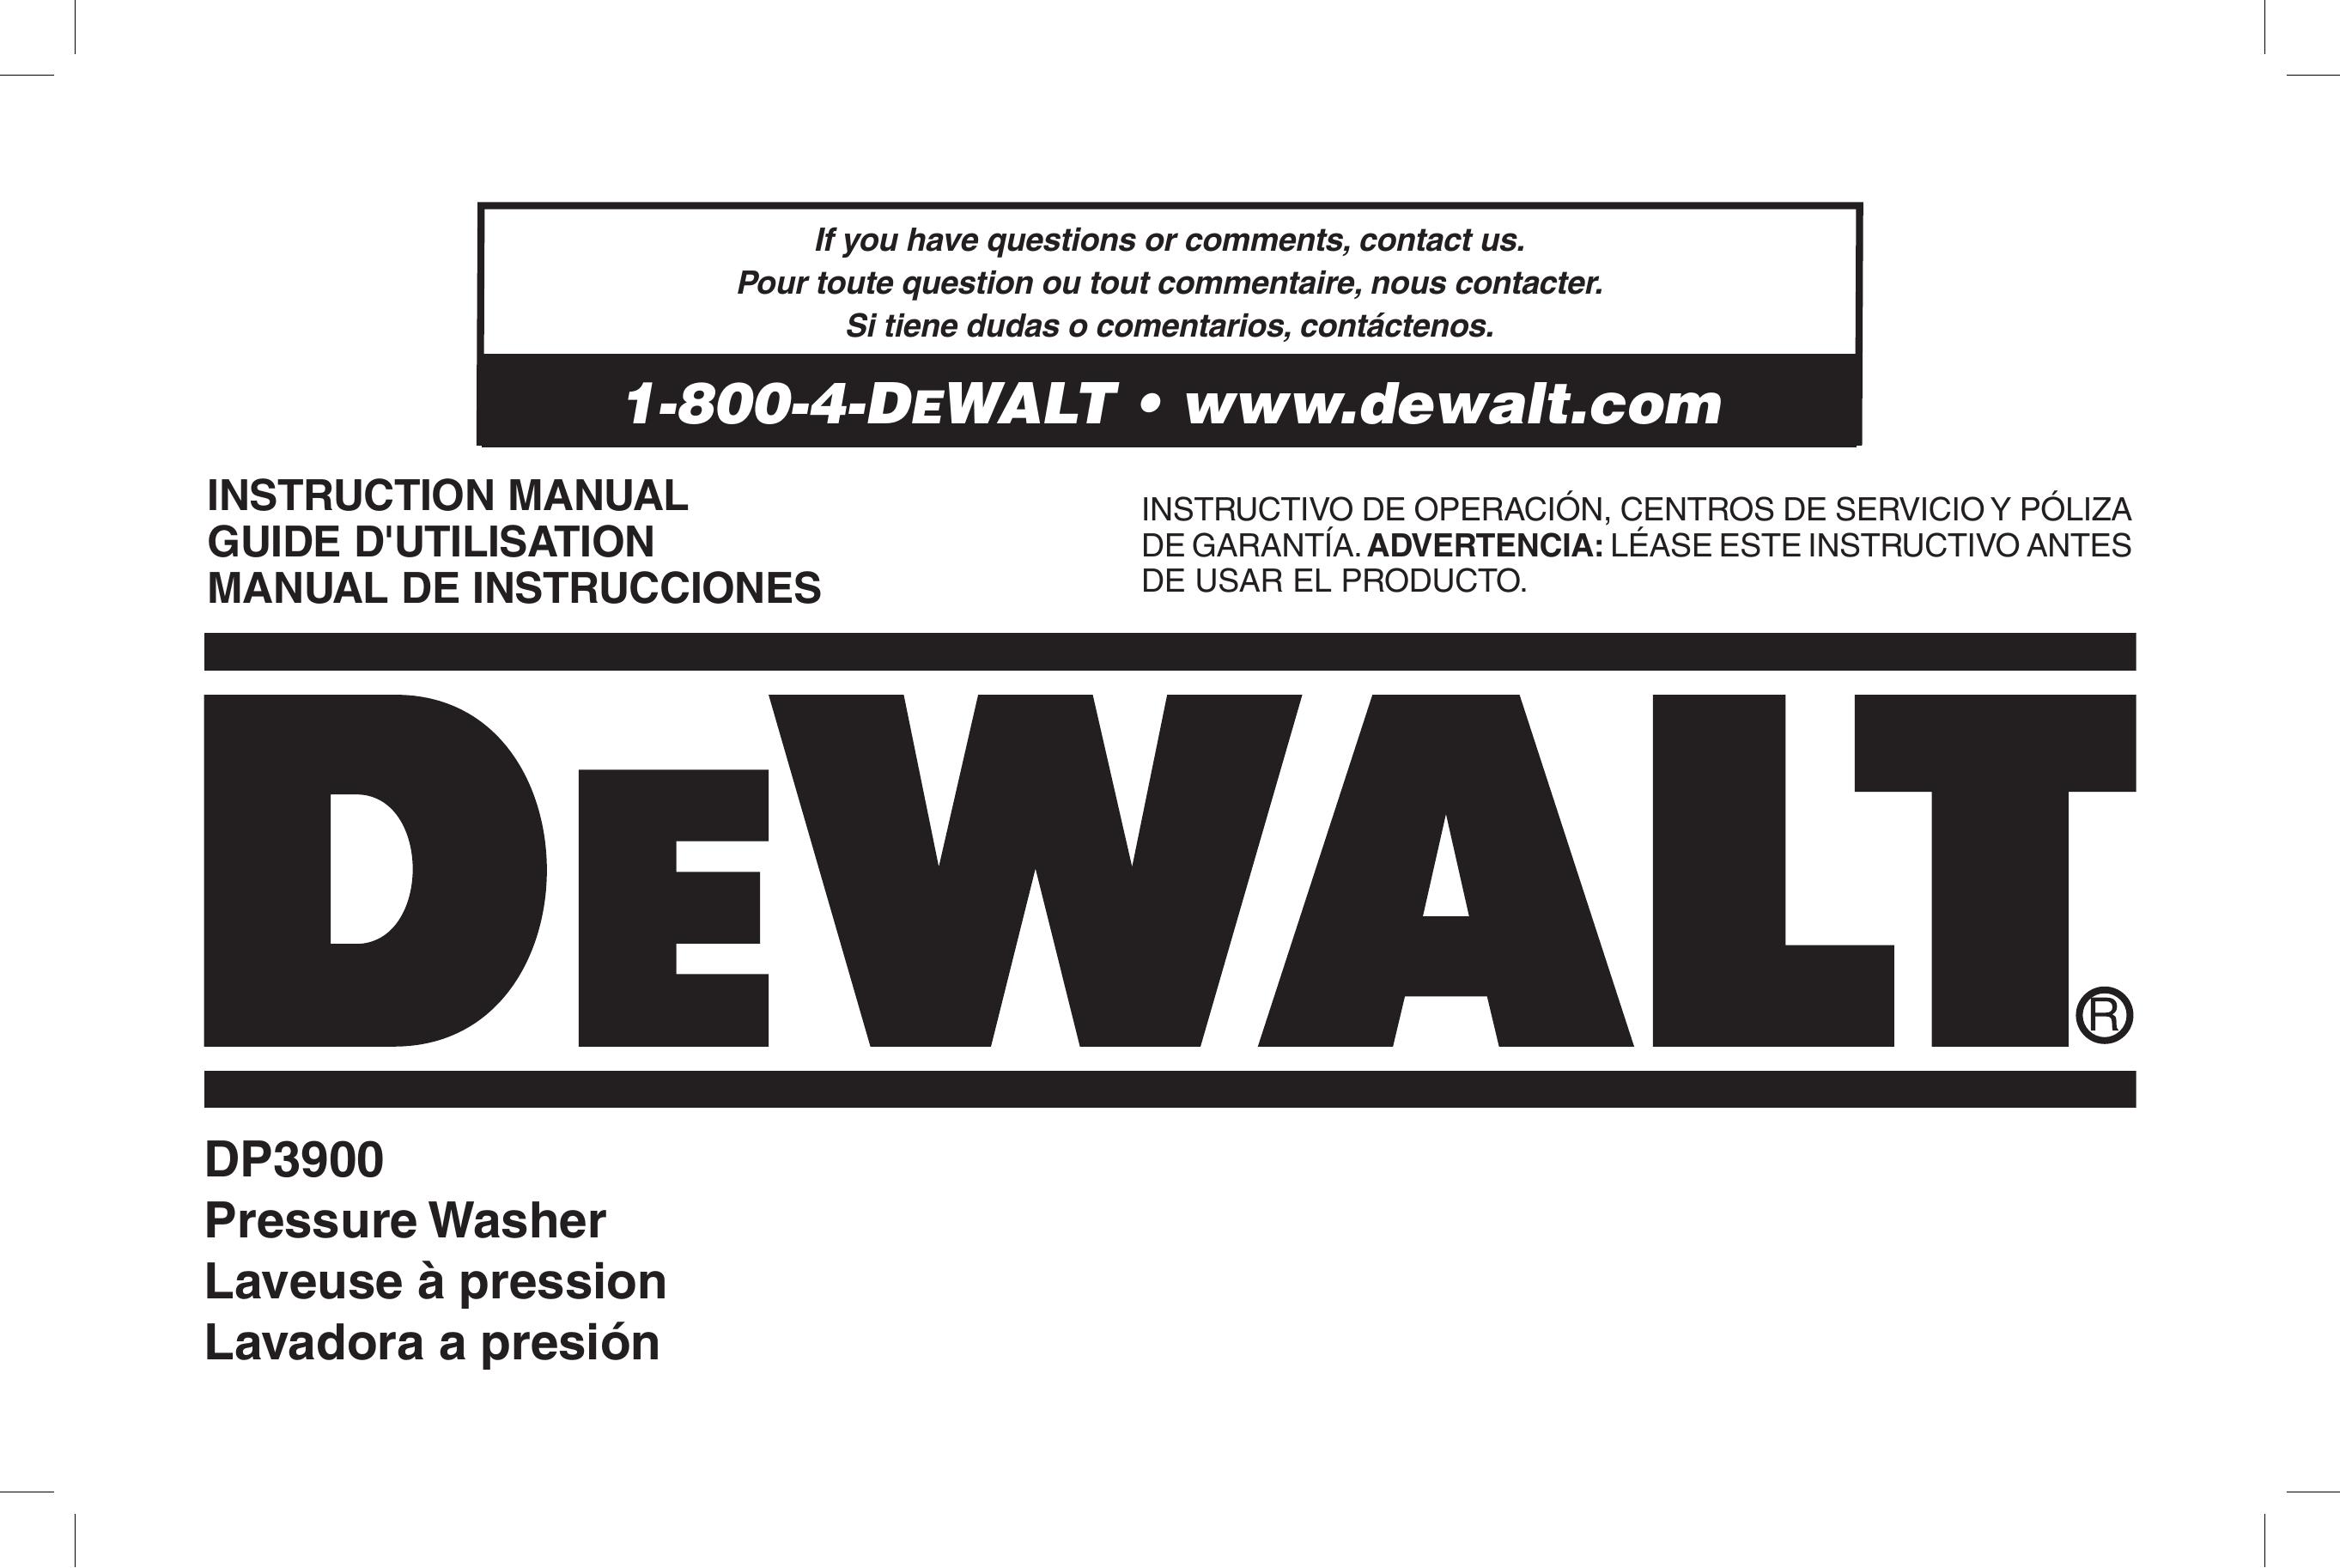 DeWalt GX390 Pressure Washer User Manual